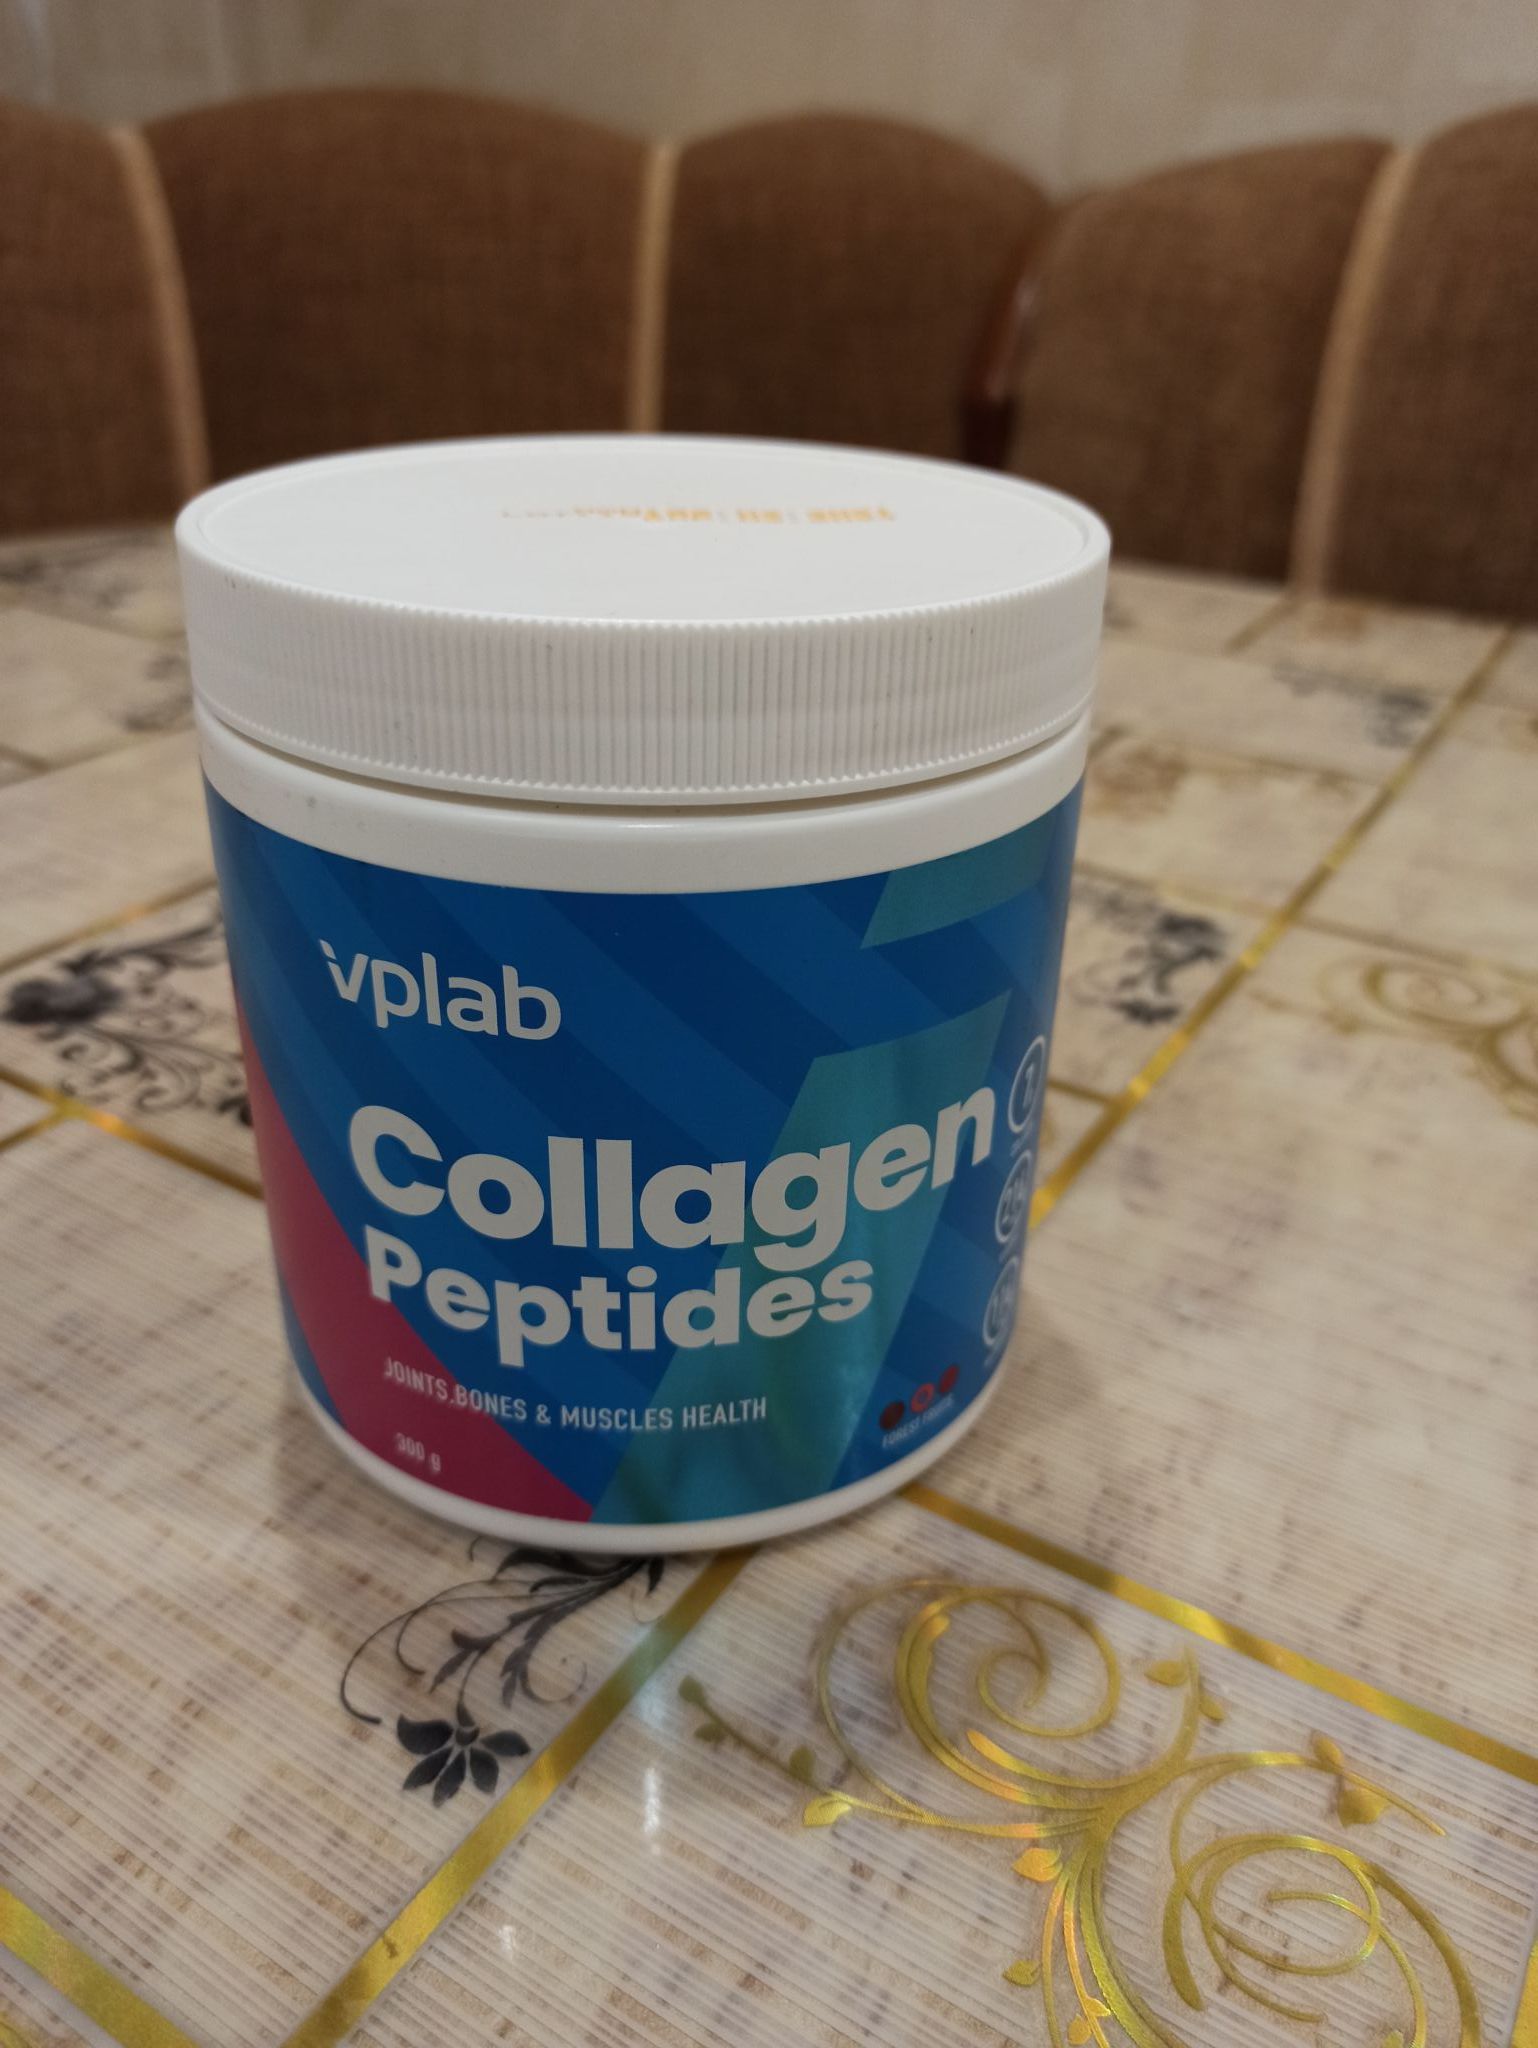 Vplab коллаген. VPLAB / Collagen Peptides / 300g / Forest Fruit. ВПЛАБ коллаген. Коллаген VPLAB Collagen Peptides. ВПЛАБ коллаген пептиды, VPLAB.